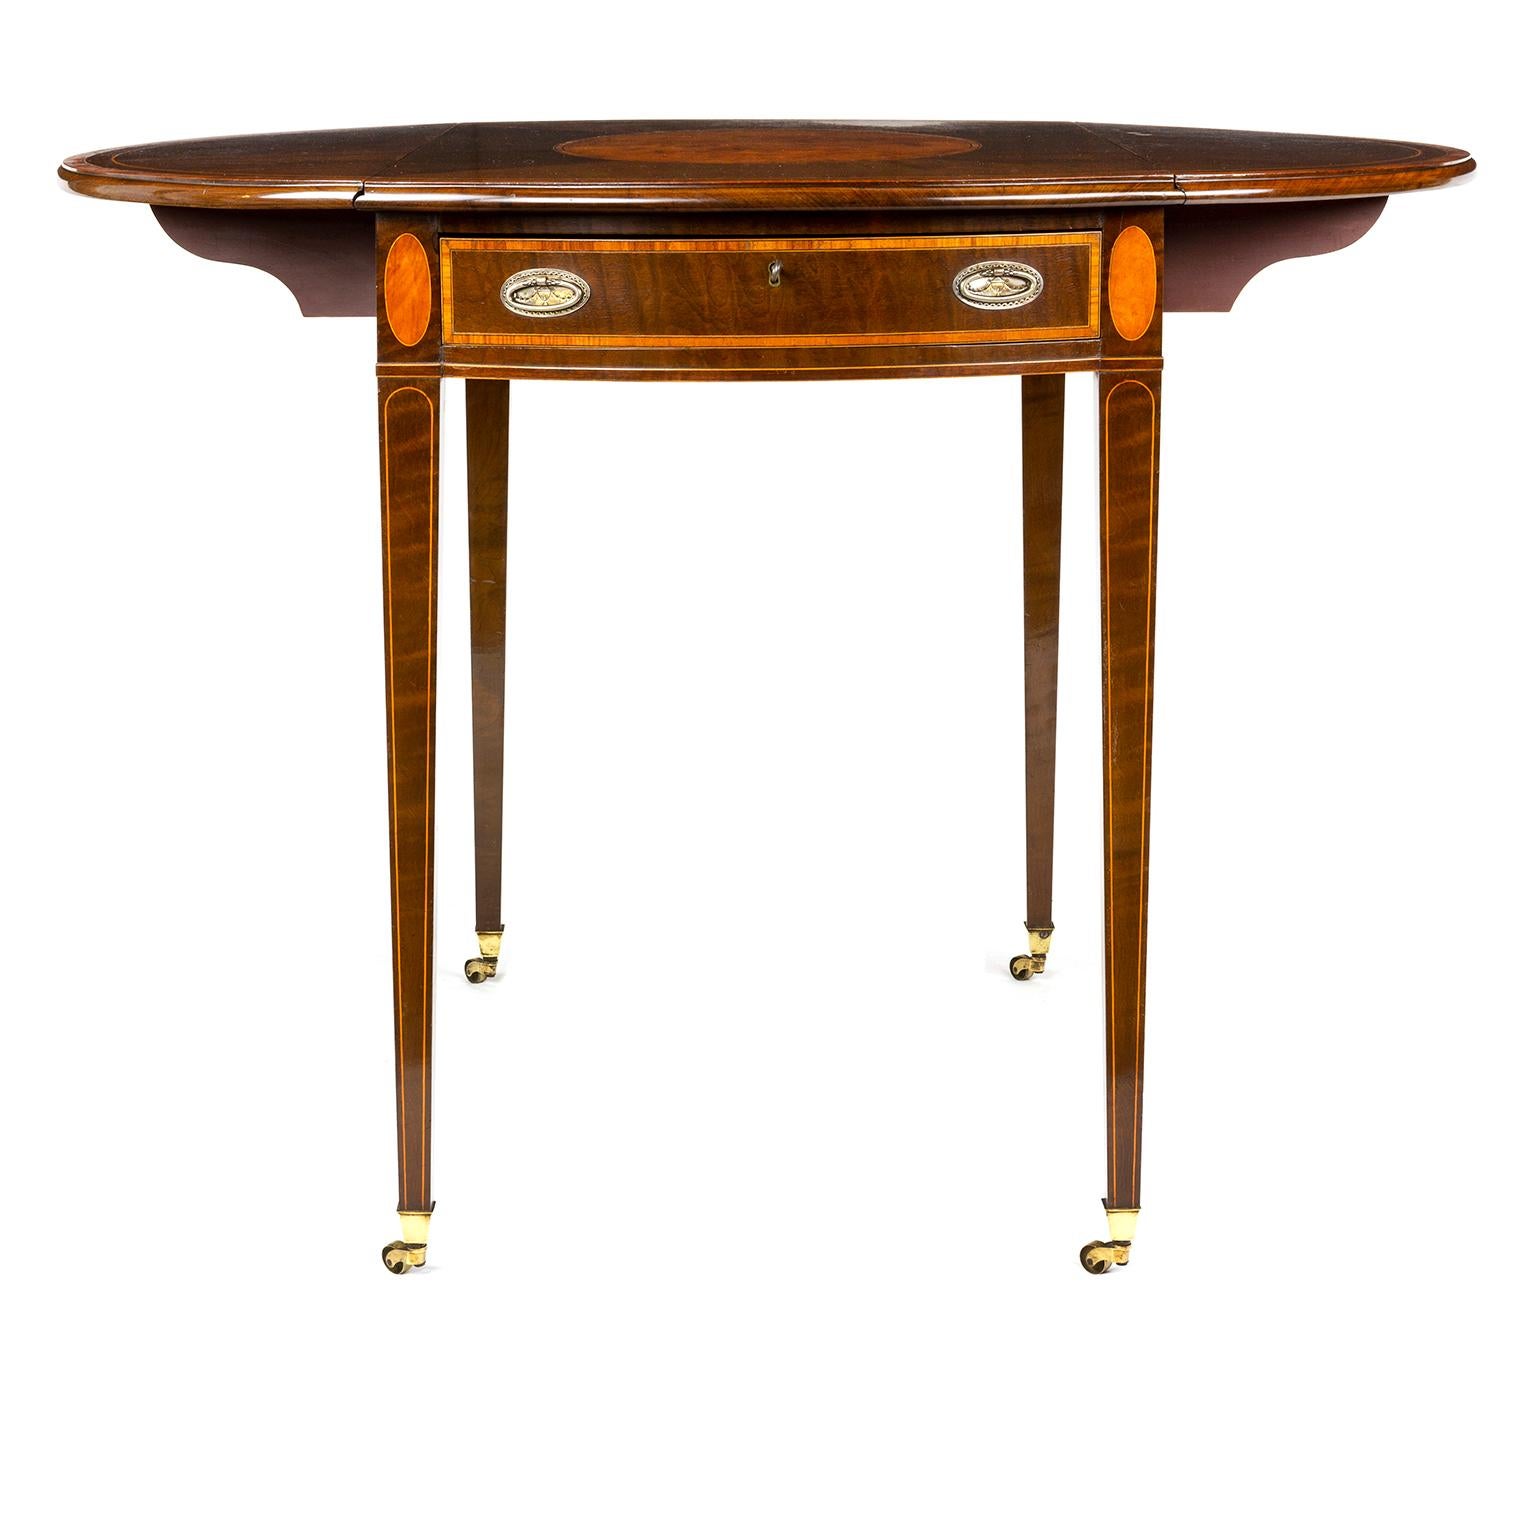 Late 18th Century 18th Century Hepplewhite Oval Sycamore Pembroke Table, circa 1780